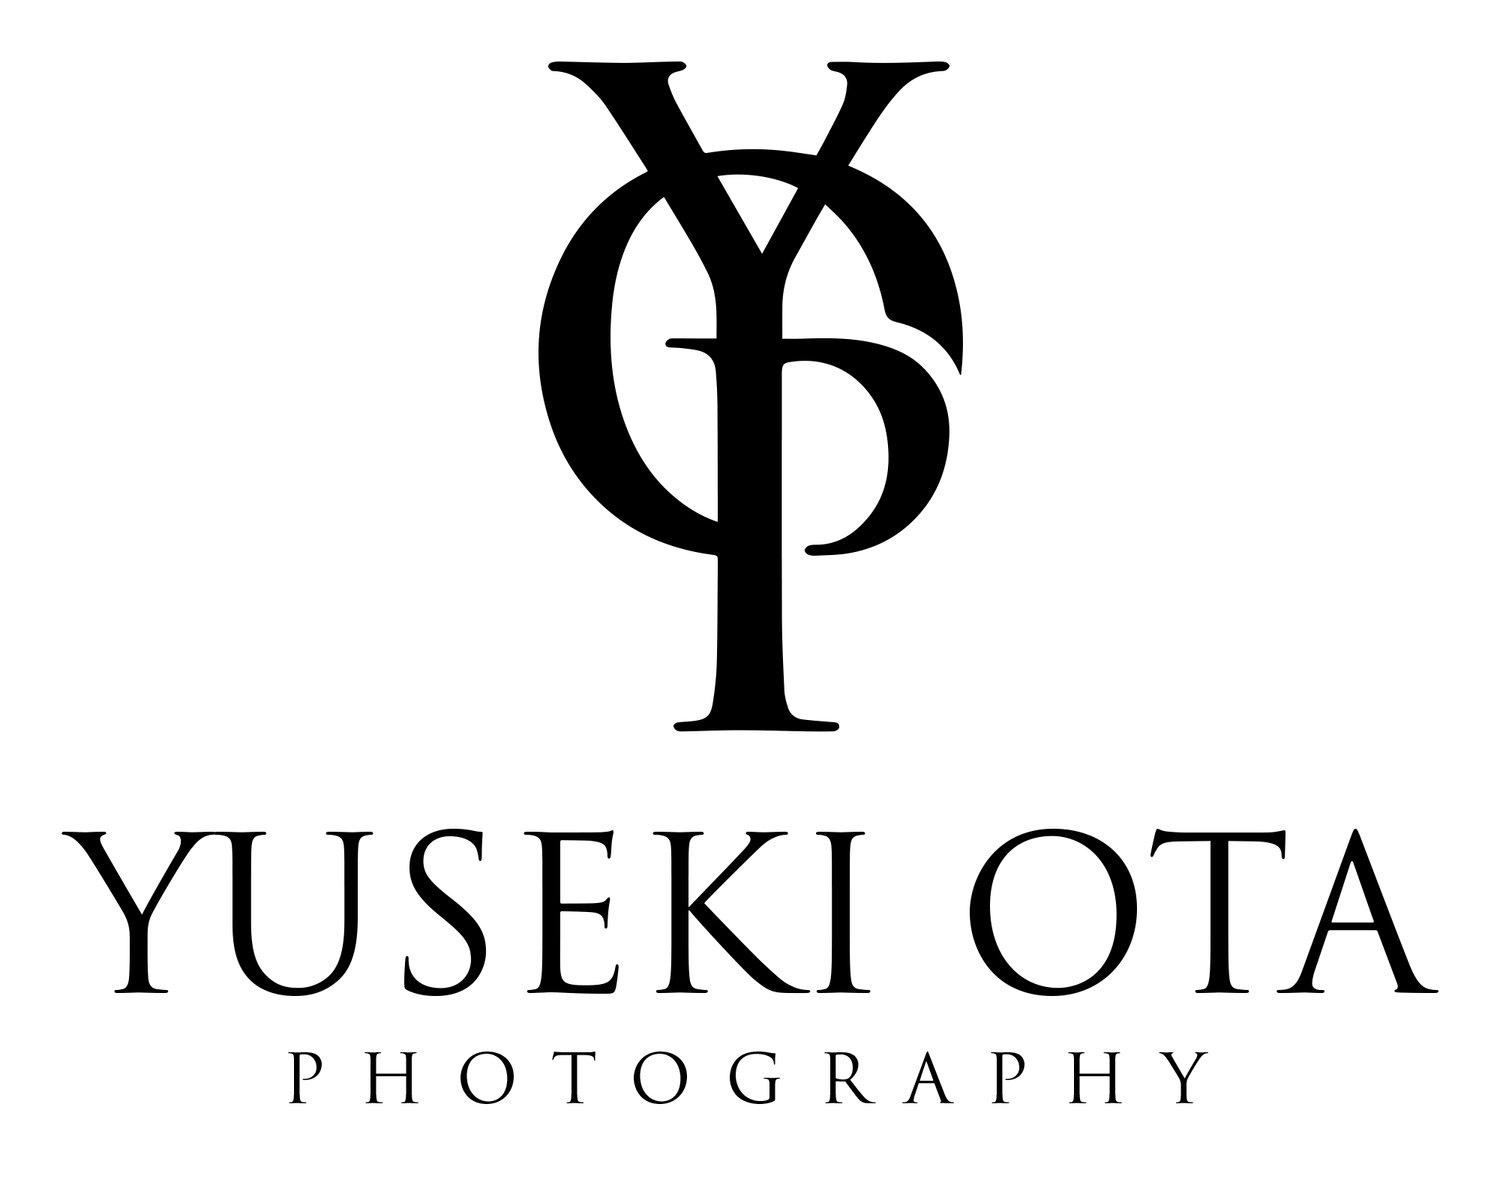 Yuseki Ota Photography